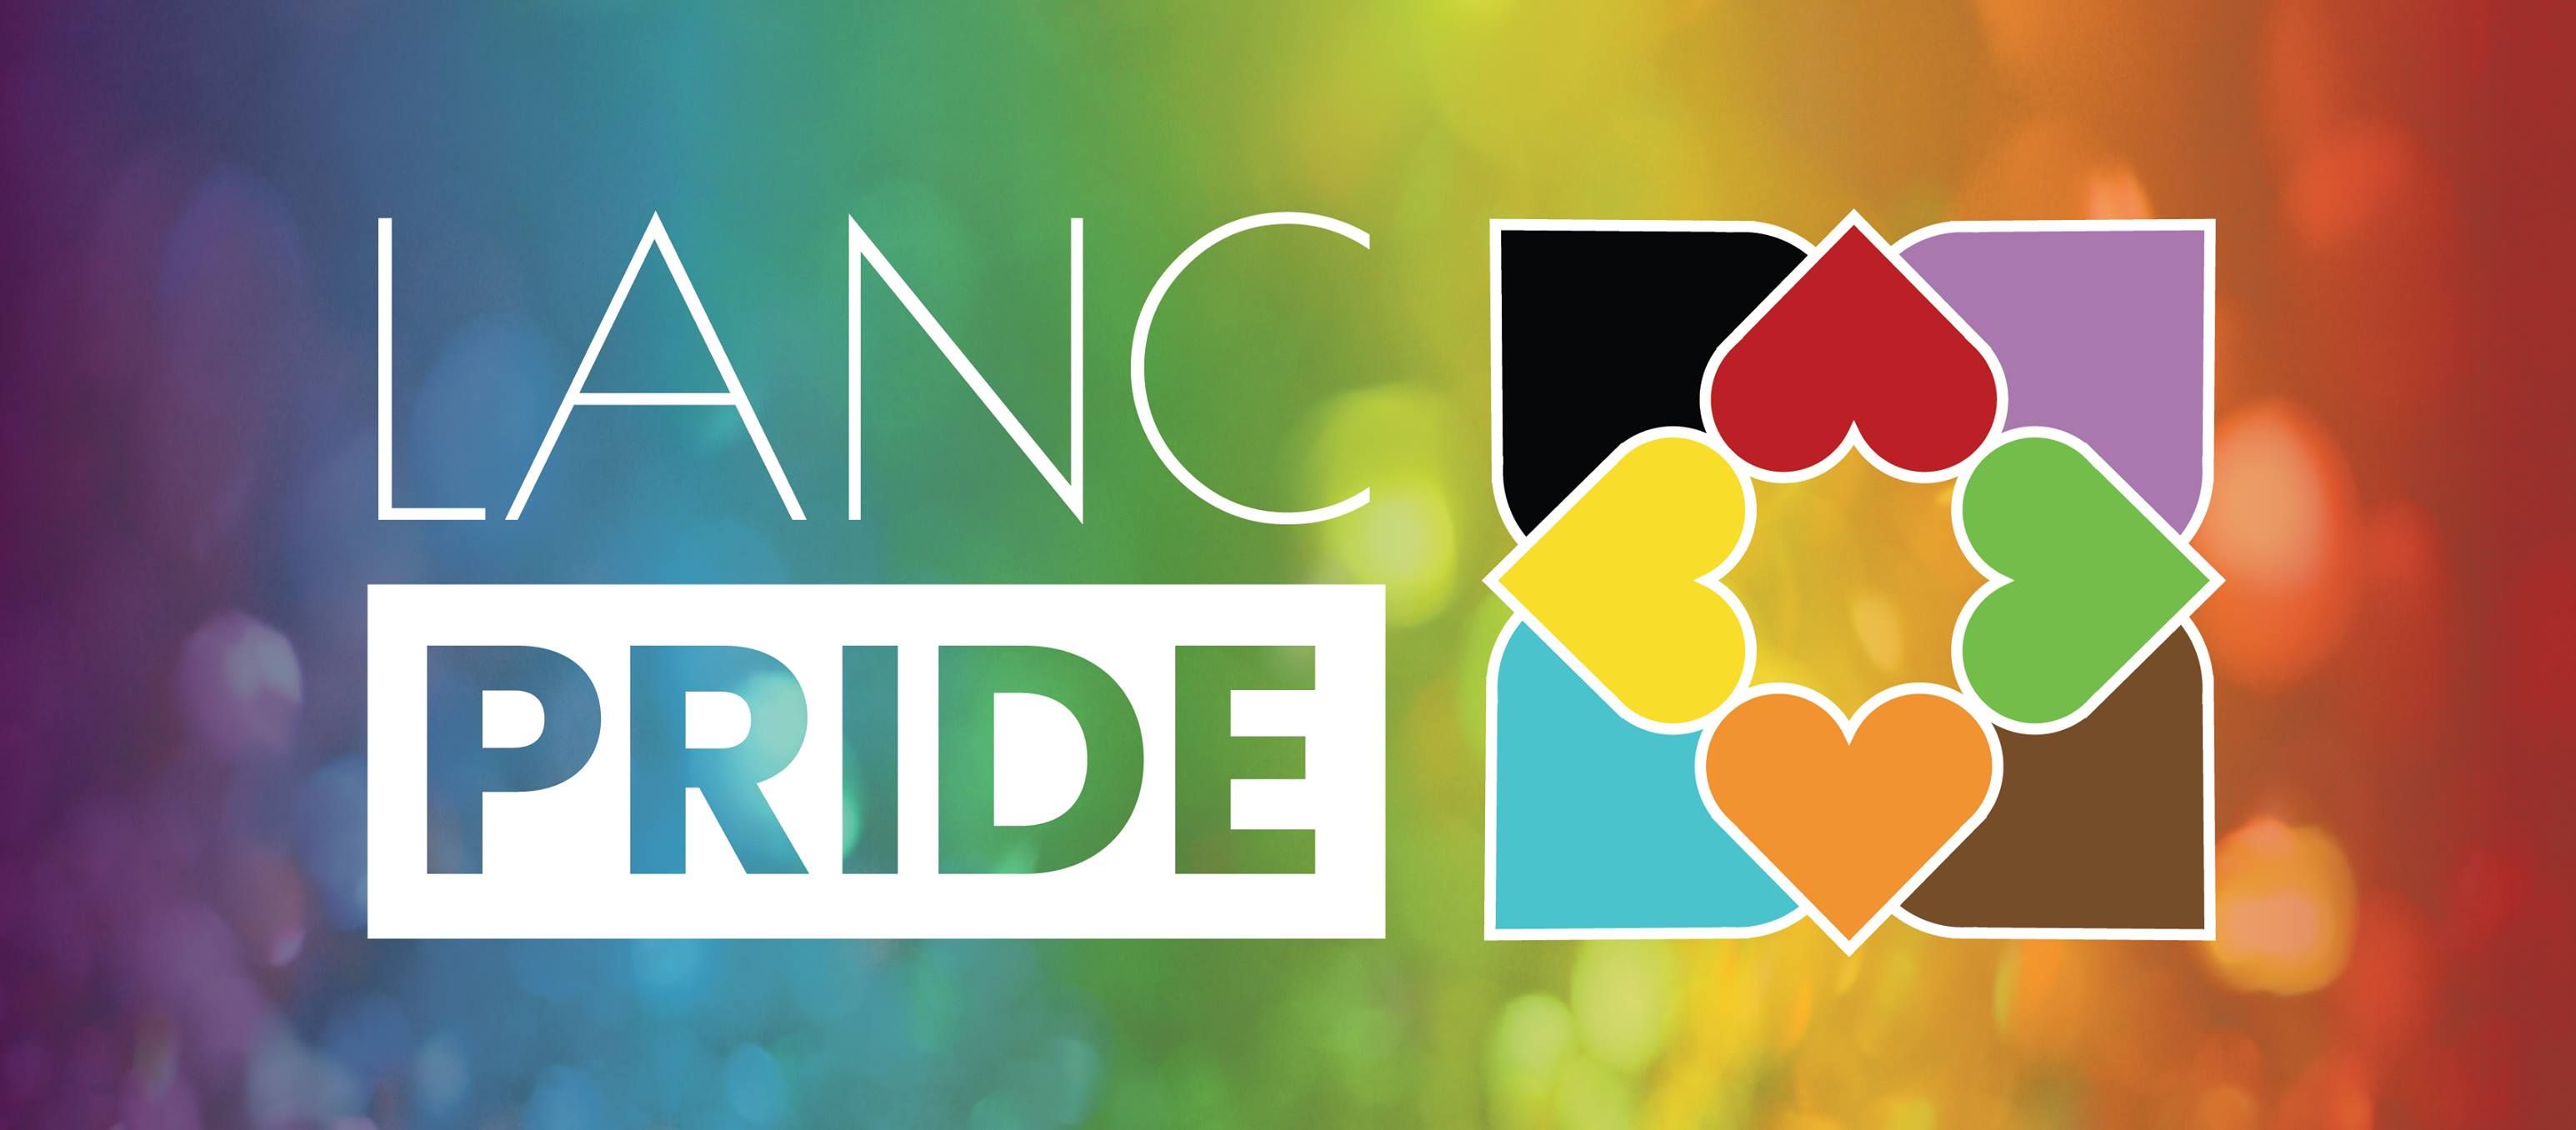 Lancaster Pride logo | Image Credit: Lancaster Pride